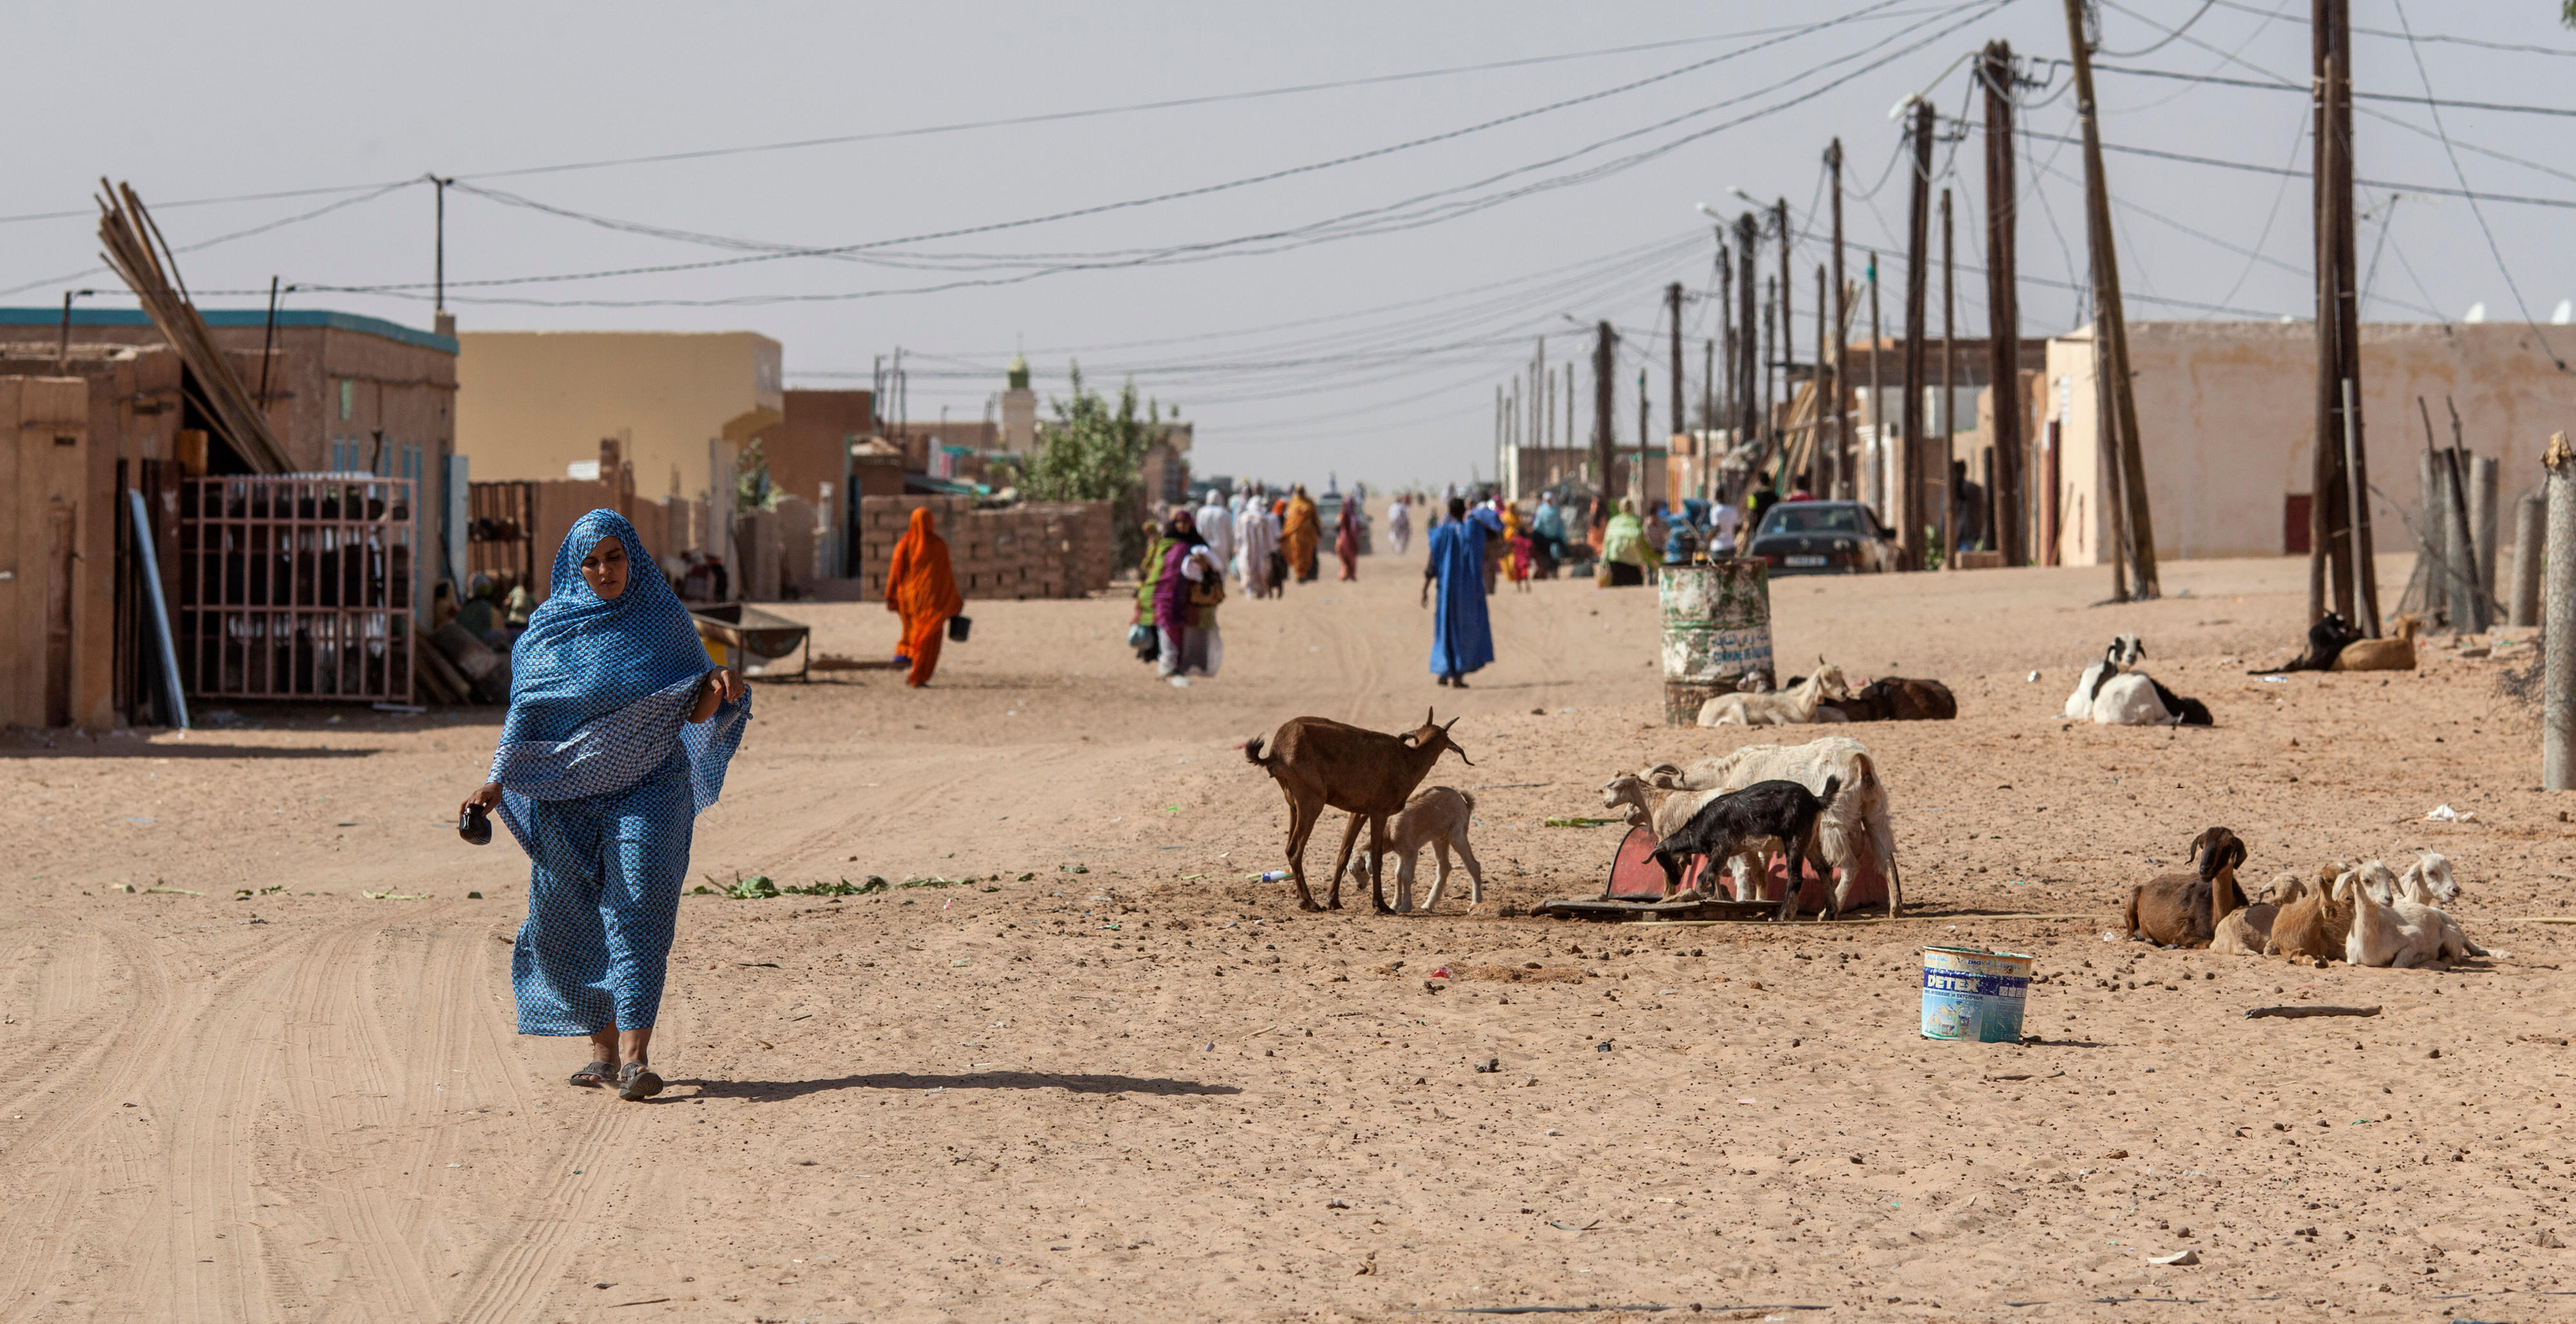 Road scene in Mauritania